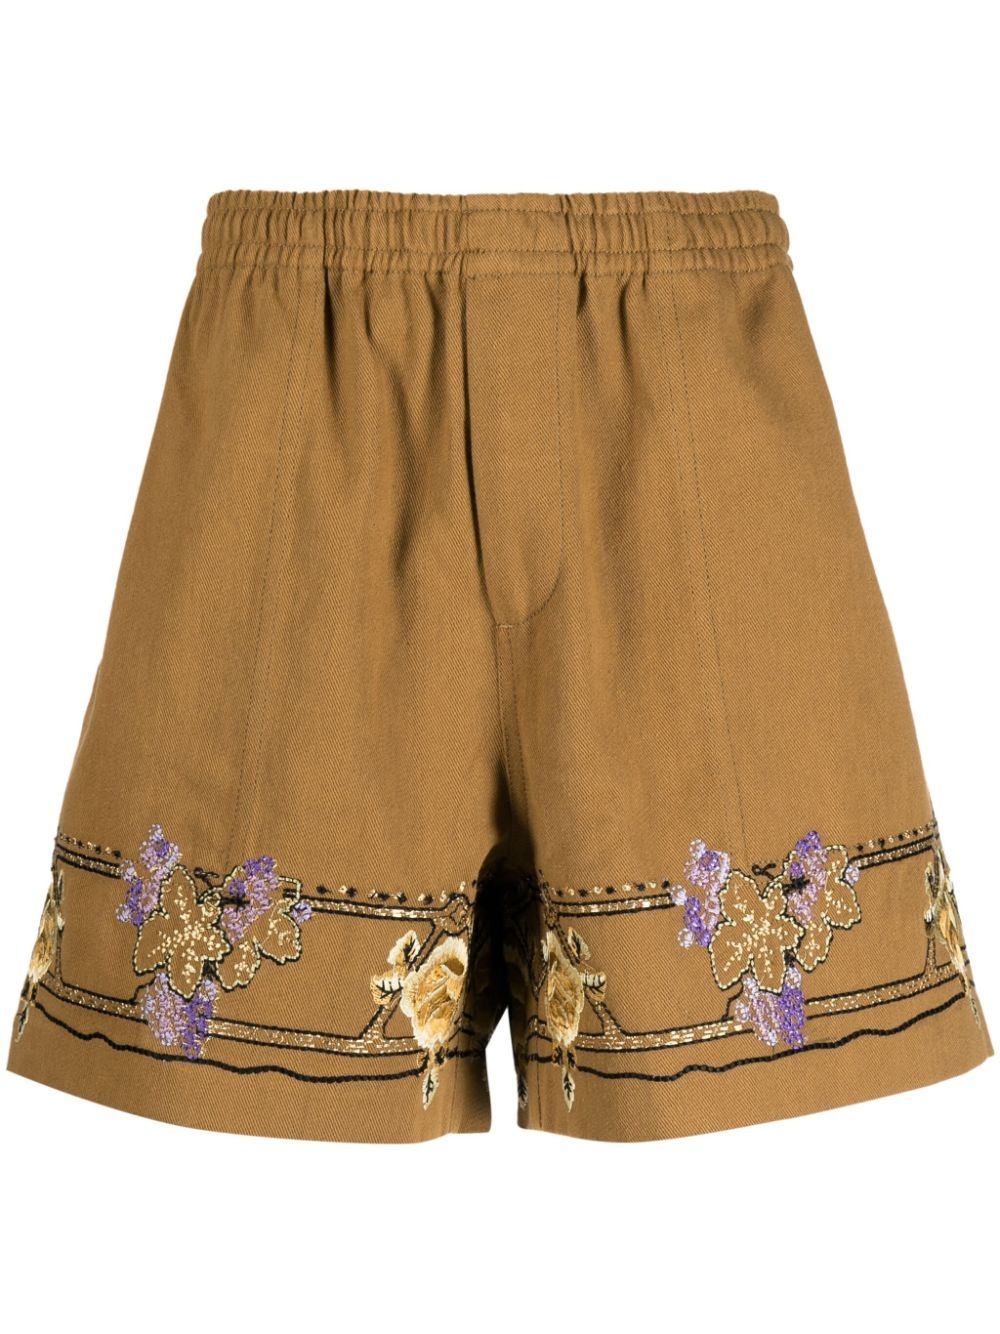 Autumn Royal cotton shorts - 1